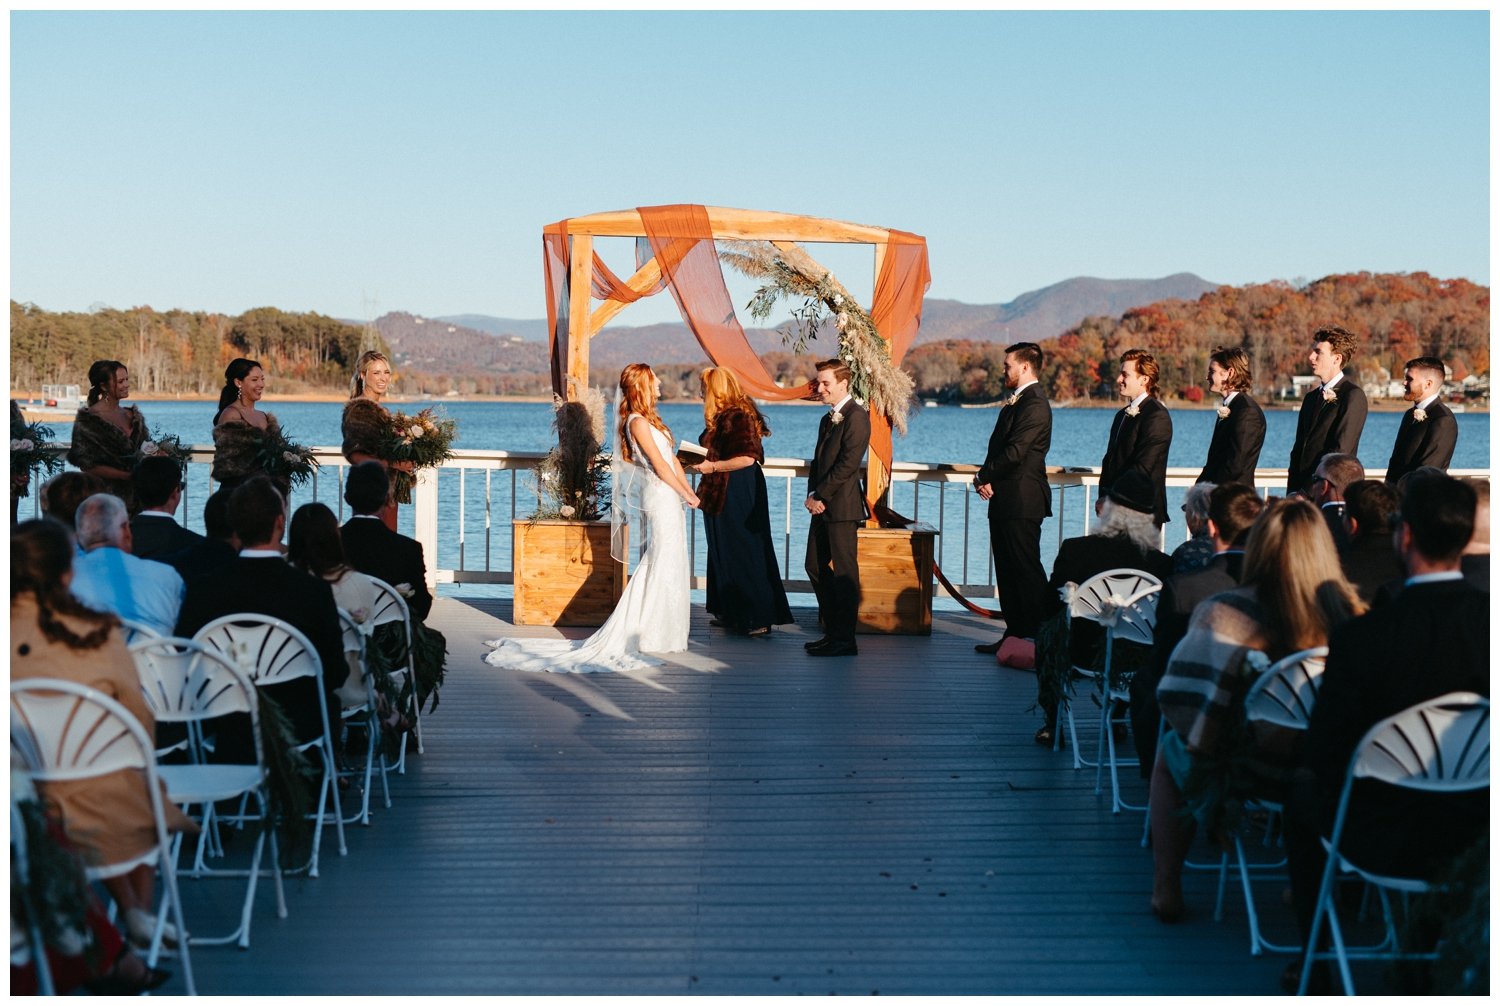 A lakeside wedding ceremony at the Ridges Resort